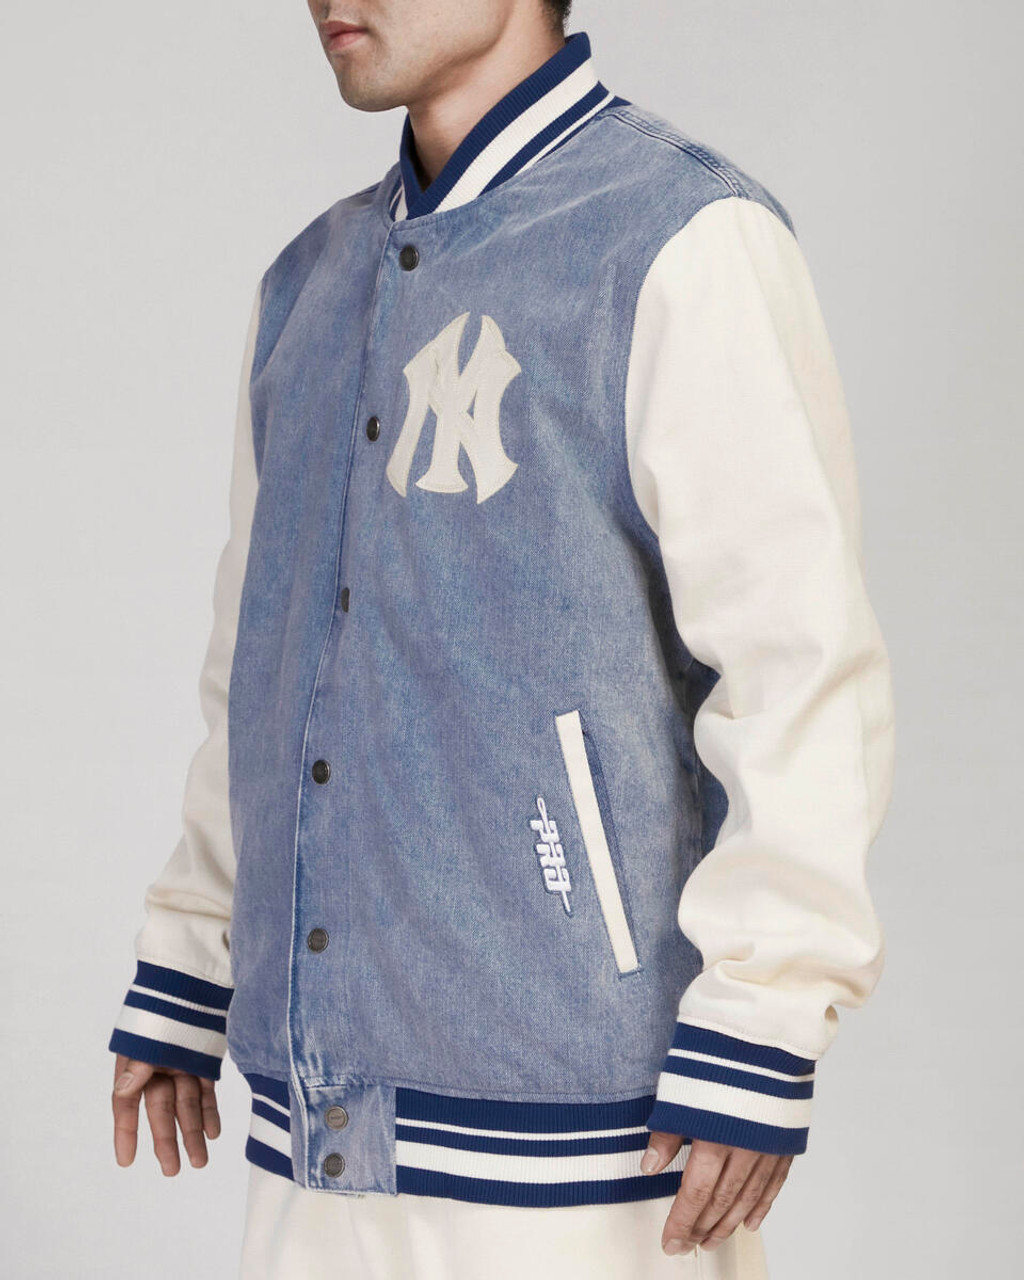 NY Yankees Varsity Blues Denim Jacket